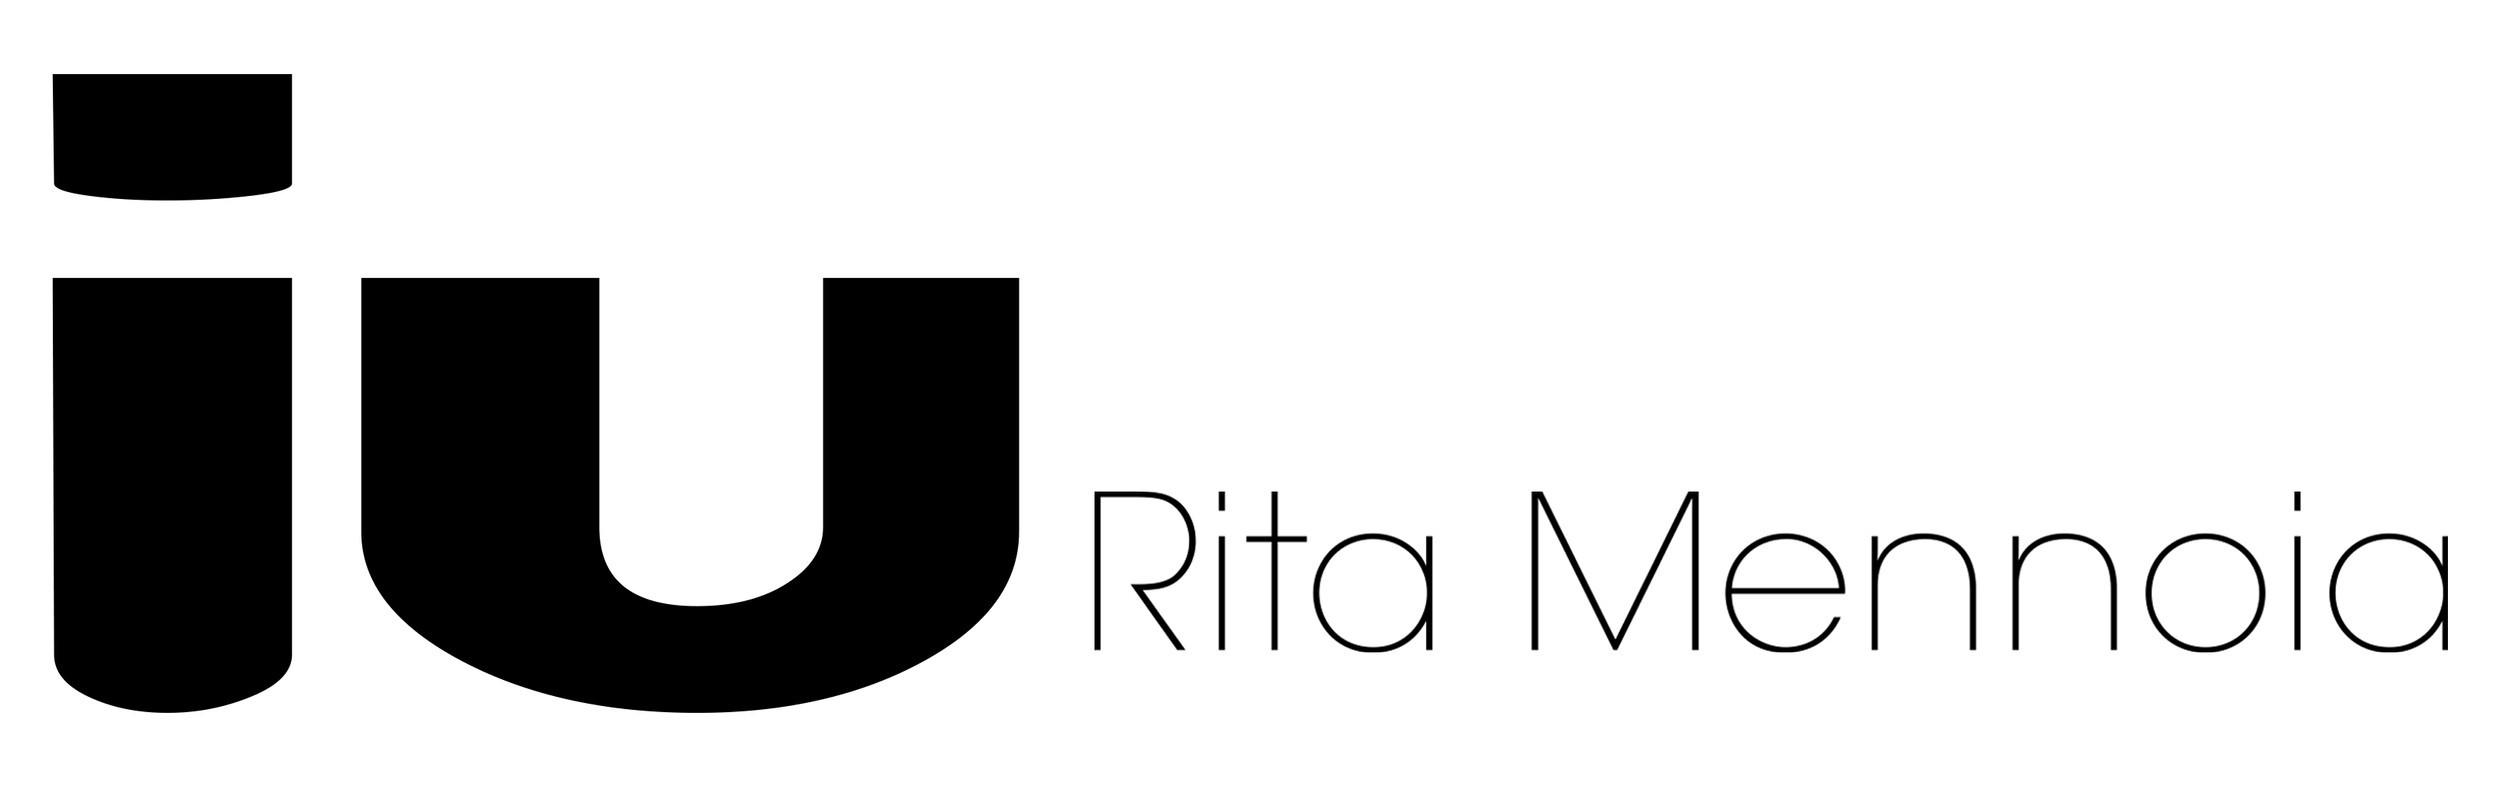 Rita Mennoia